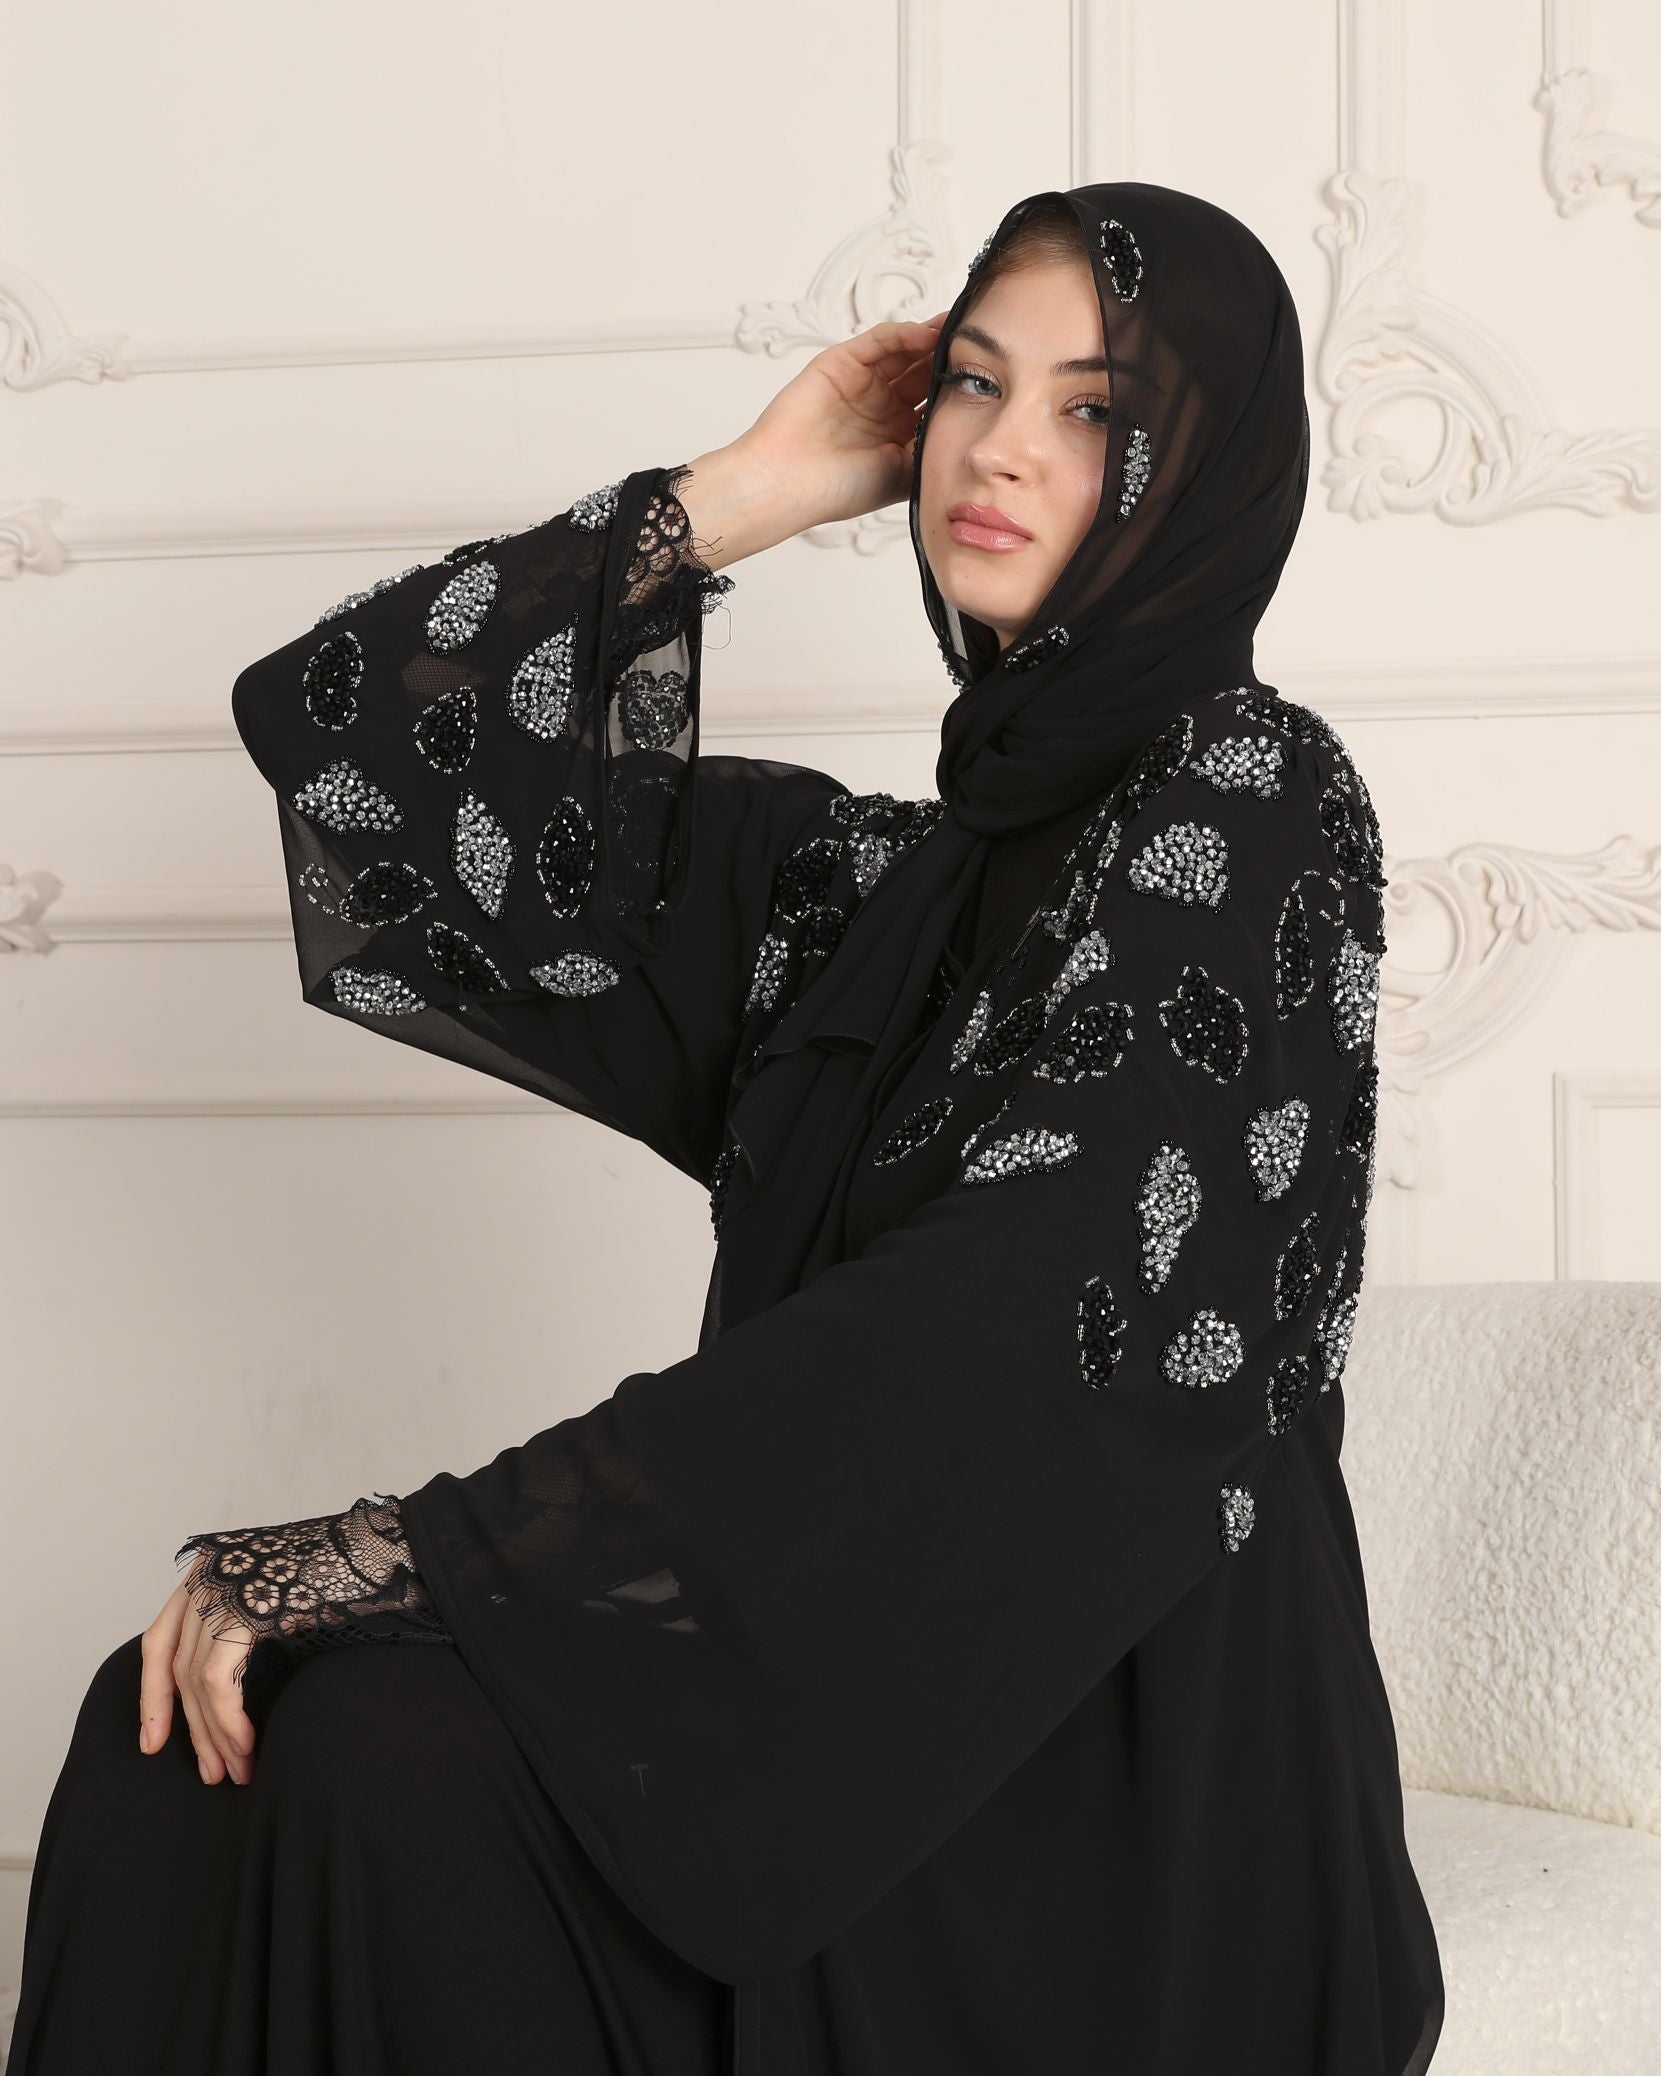 Timeless Elegance: Black Chiffon Abaya with Handmade Stones